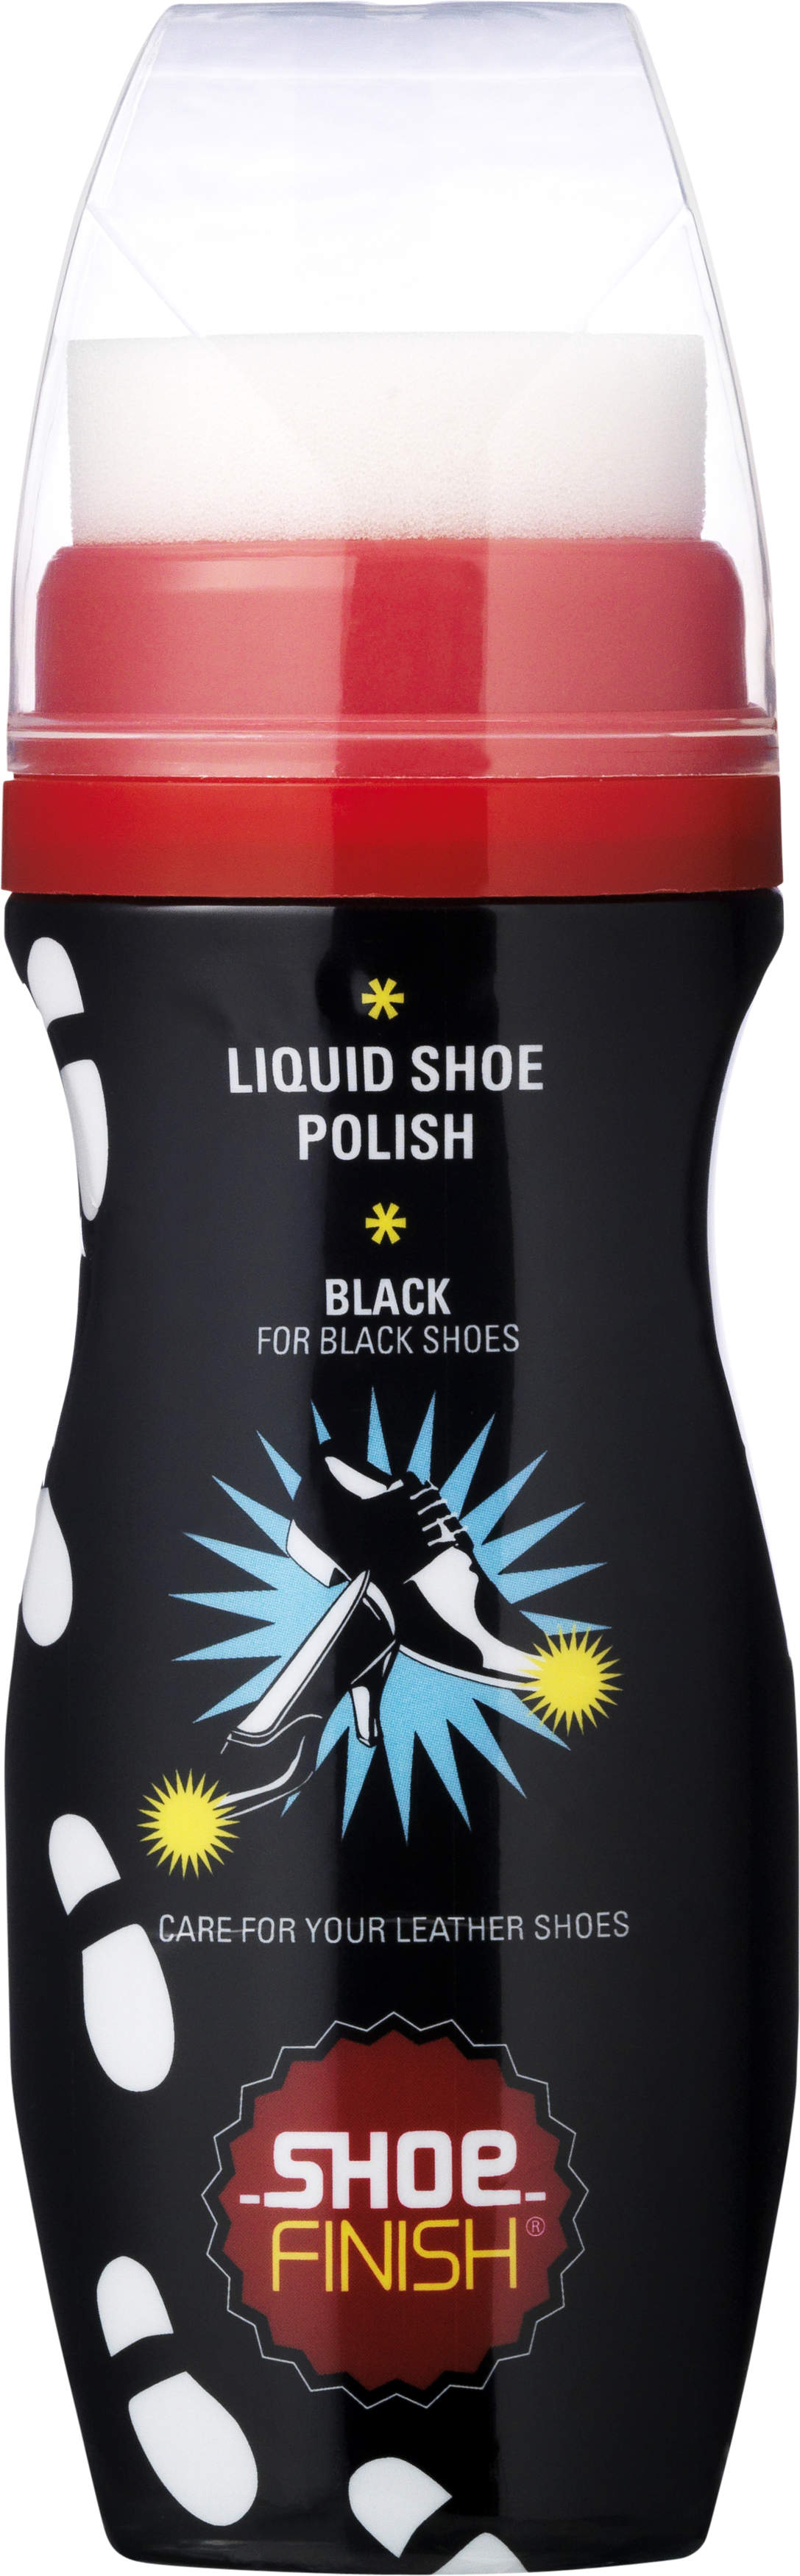 Black liquid shoe polish